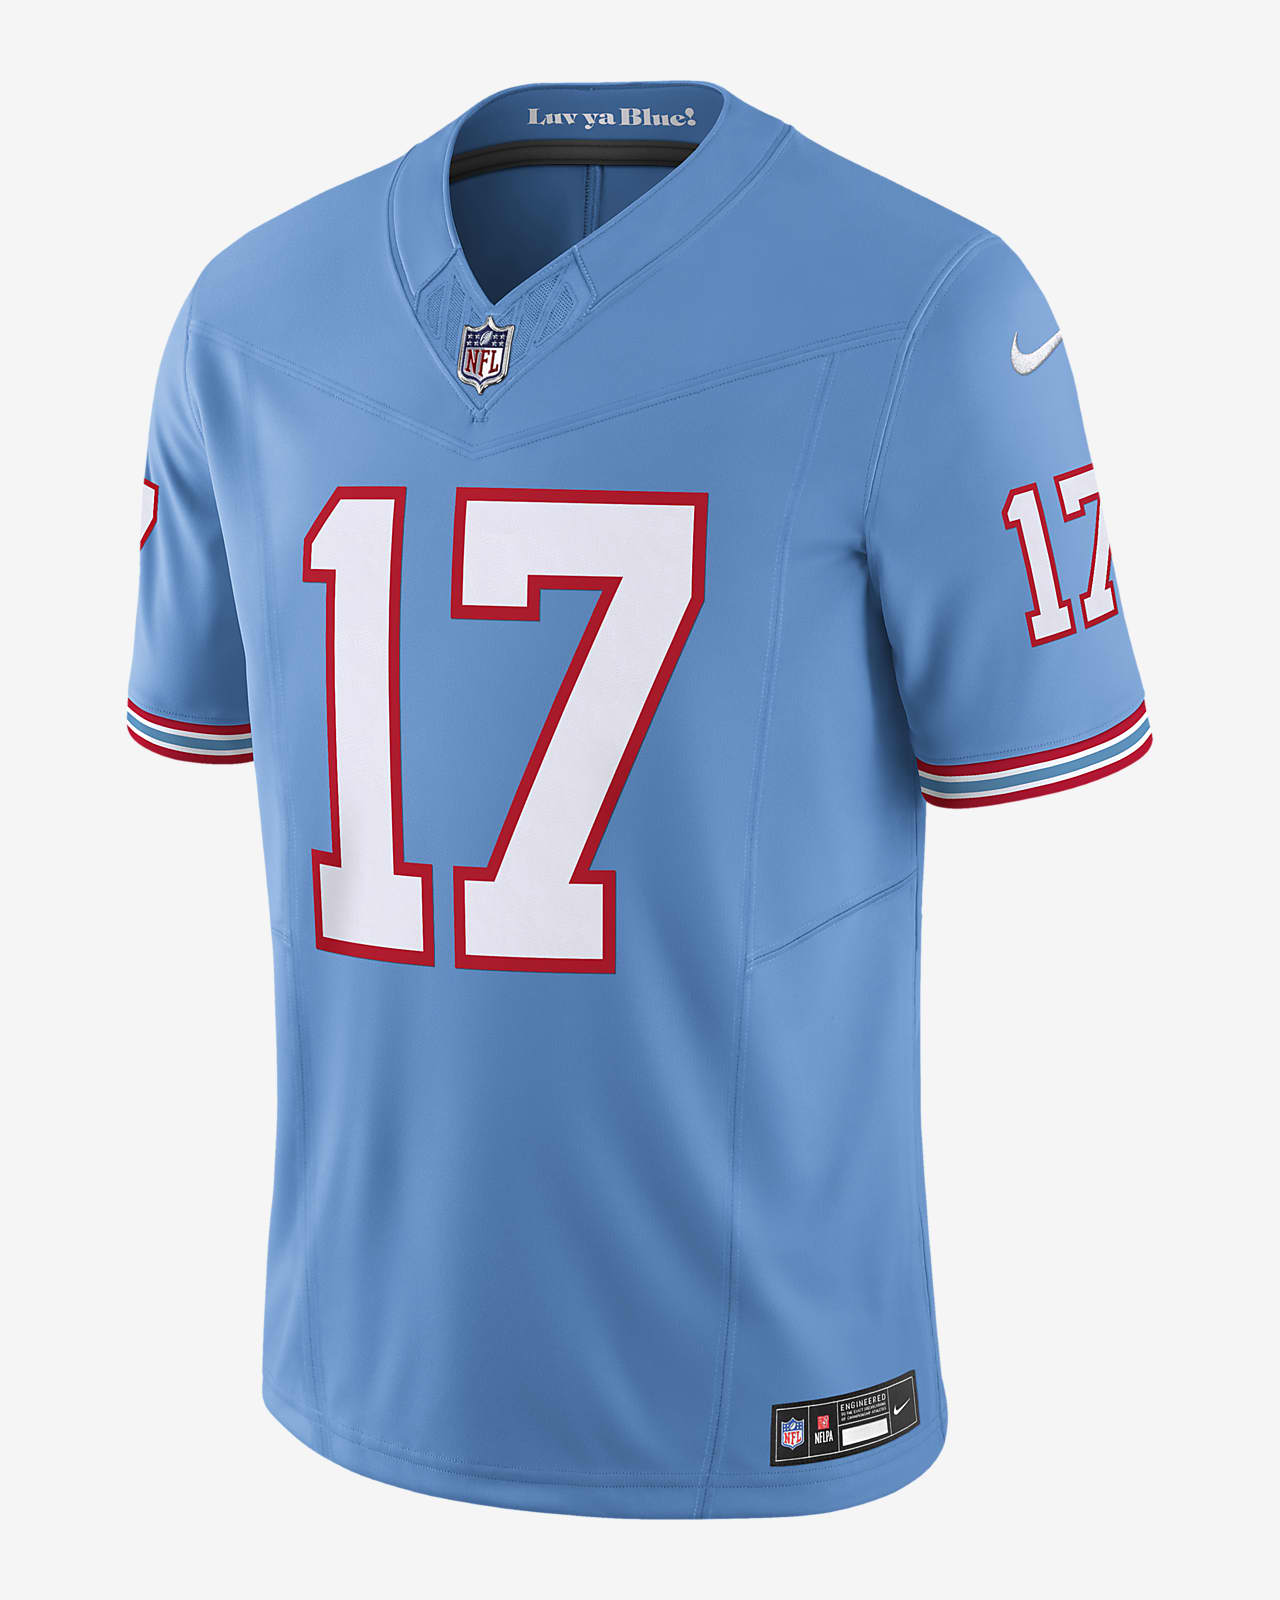 Jersey de fútbol americano Nike Dri-FIT de la NFL Limited para hombre Ryan Tannehill Tennessee Titans